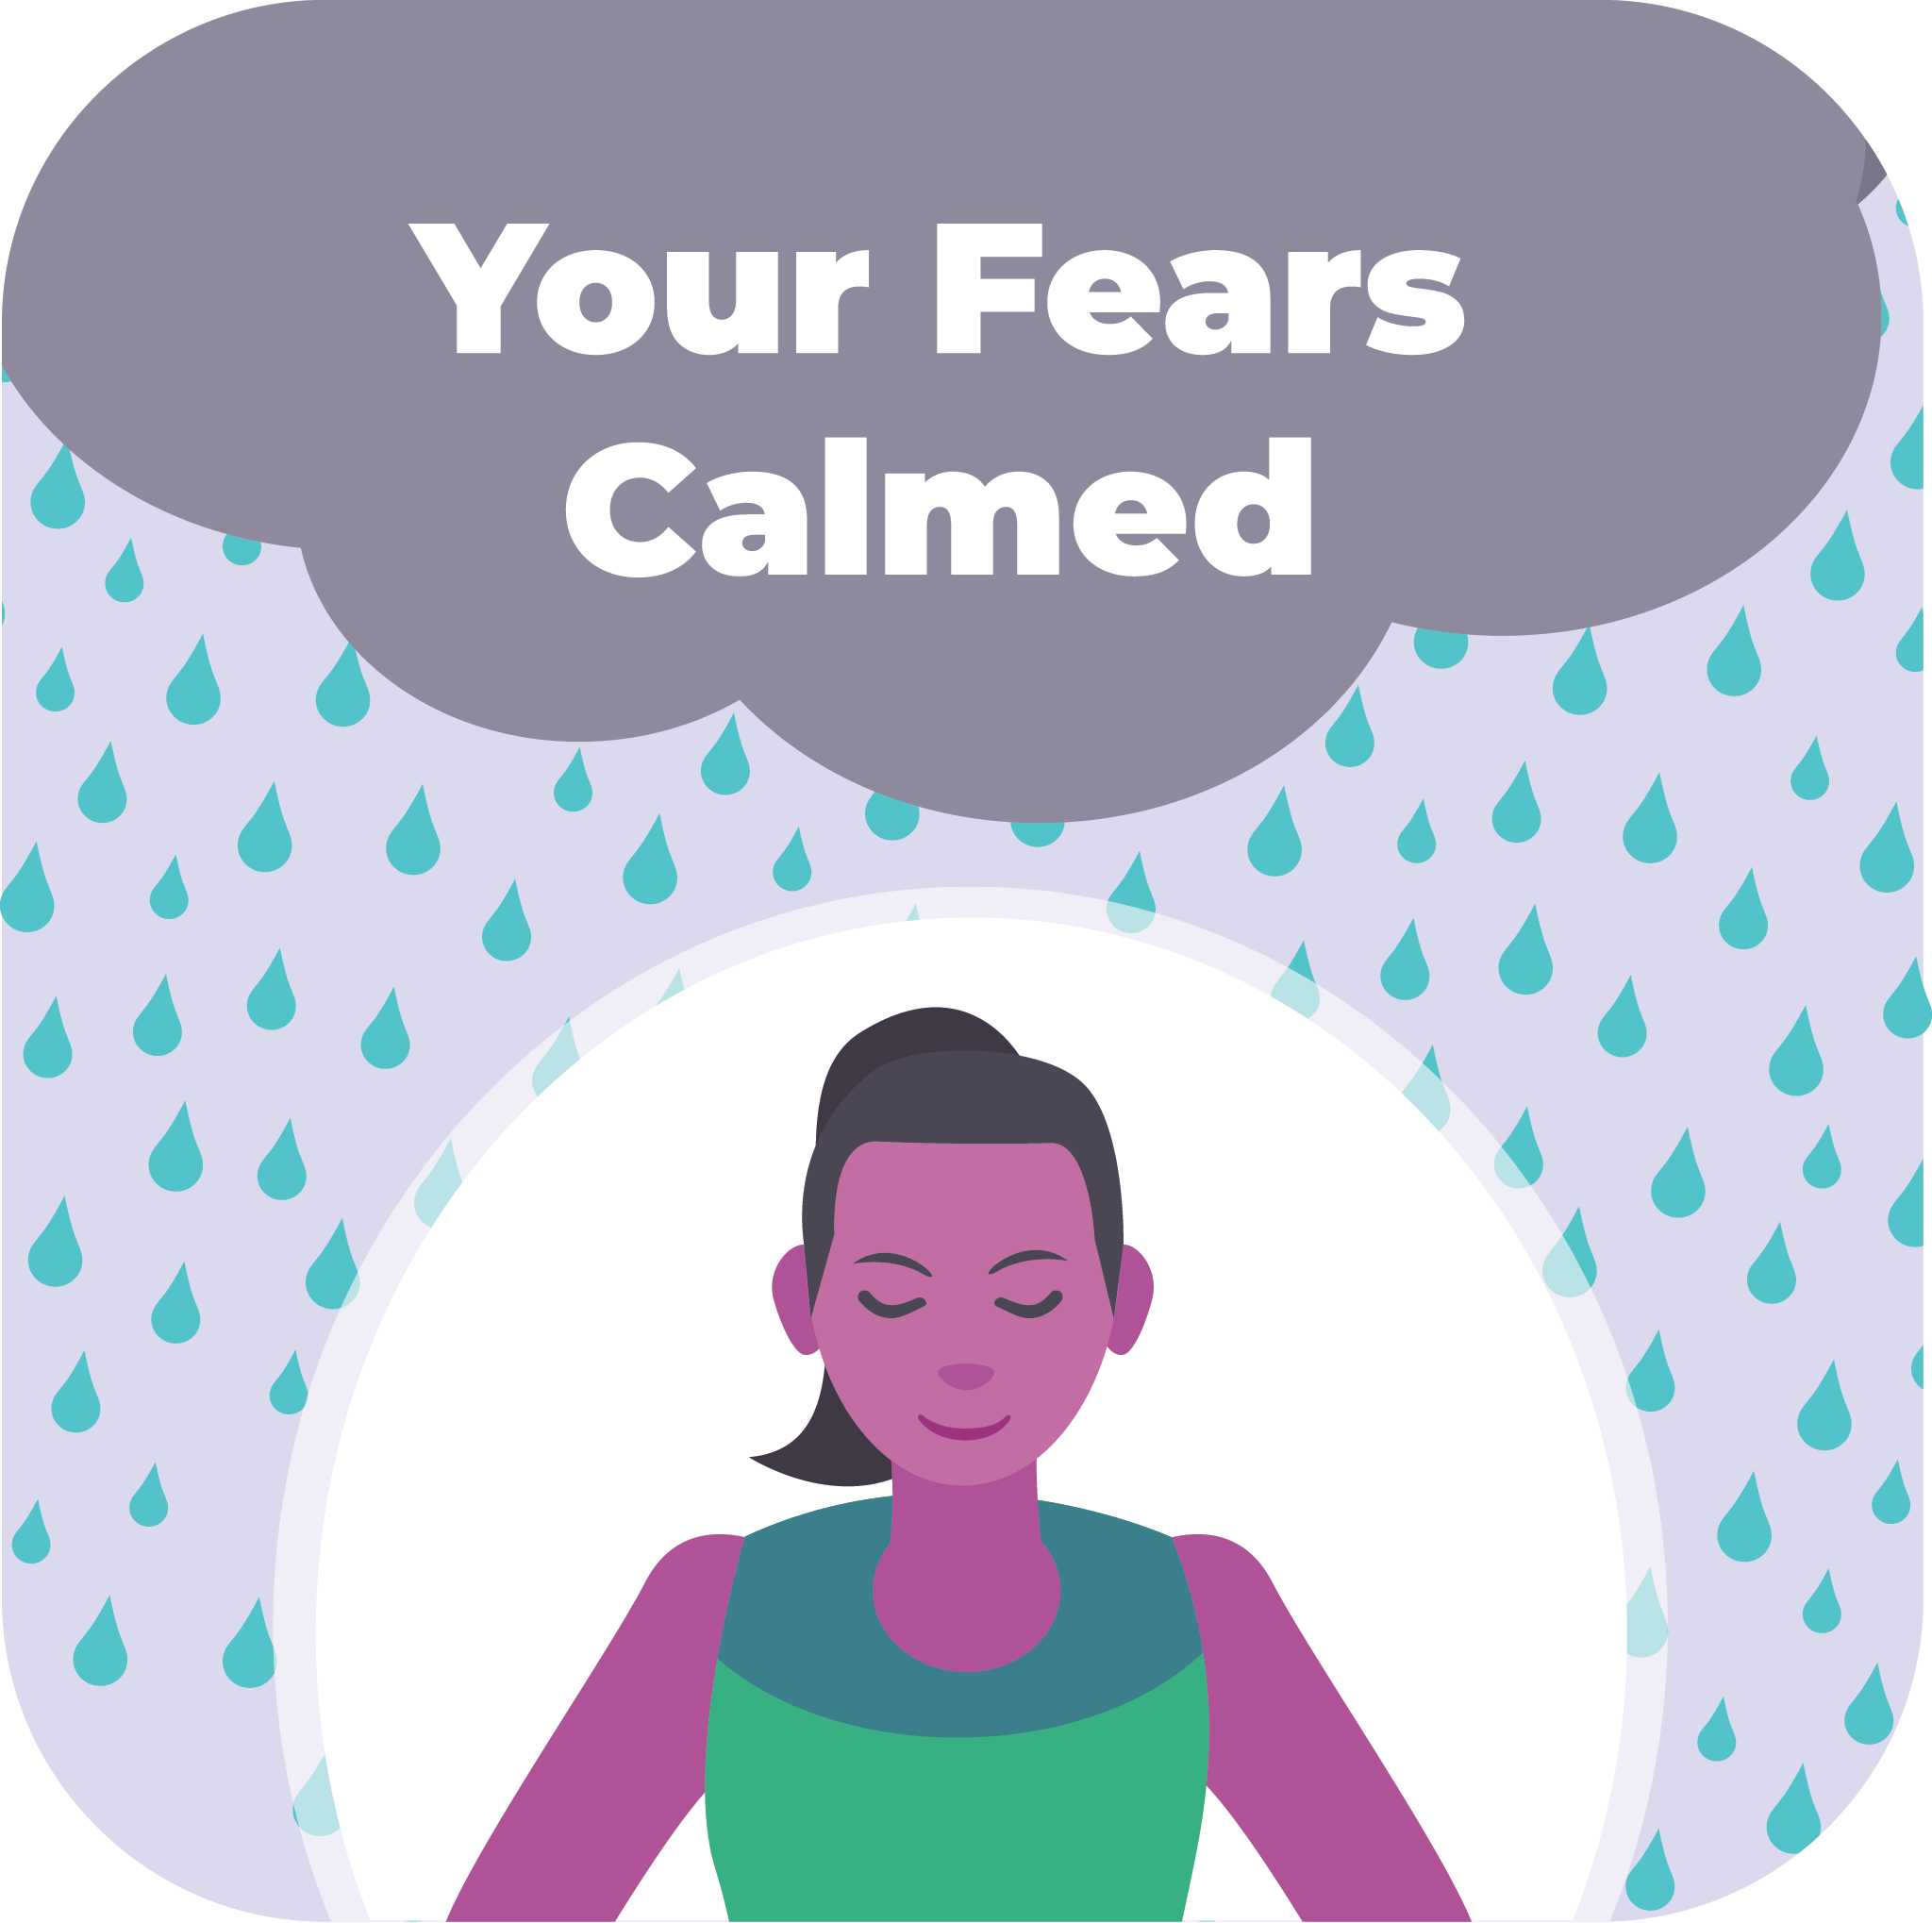 Your fears calmed.